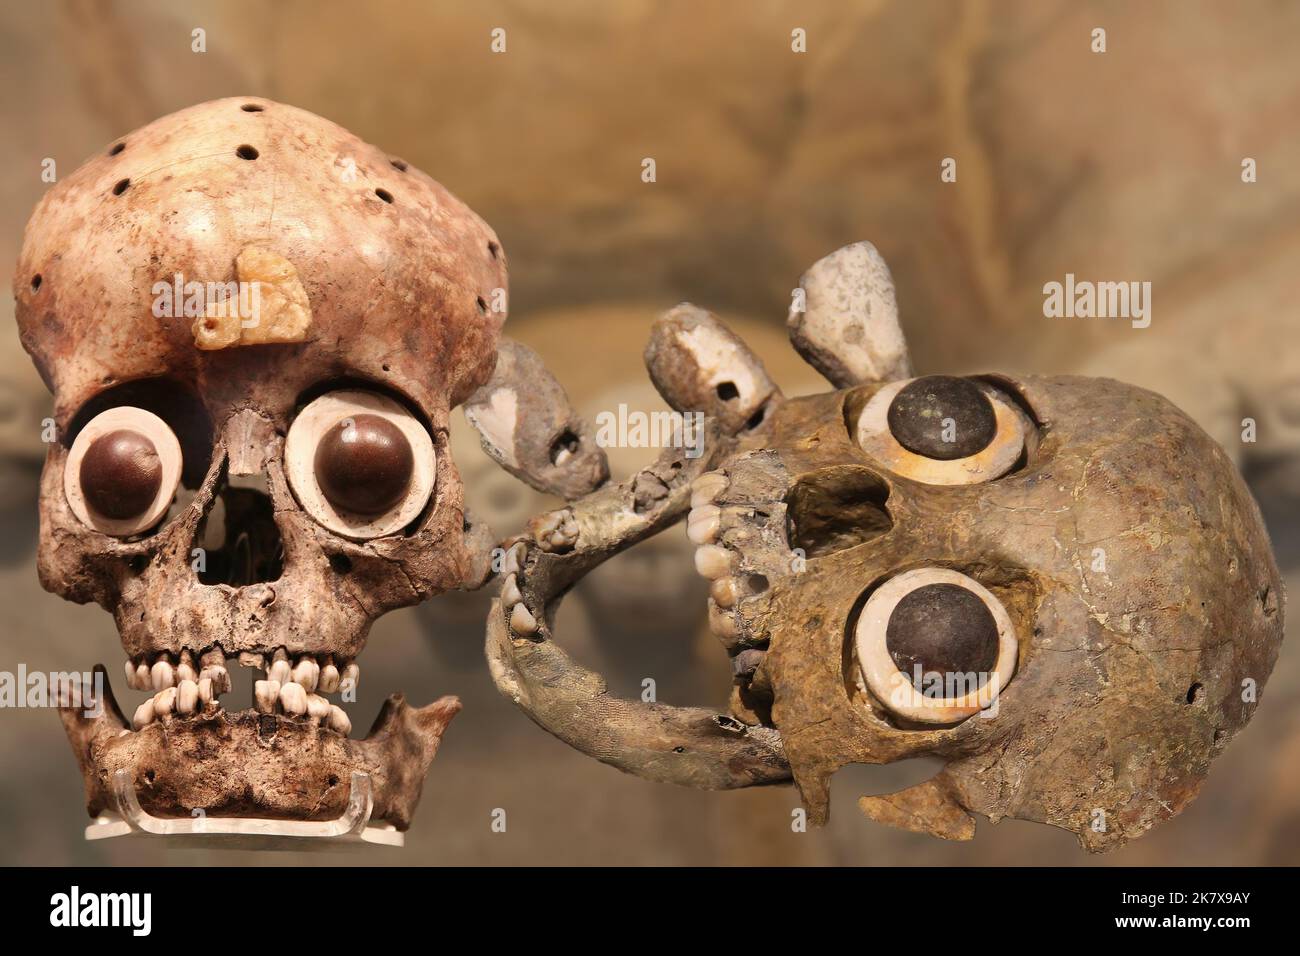 Human Sacrifices - Skulls of Sacrificial Victims offered to Aztec gods Stock Photo